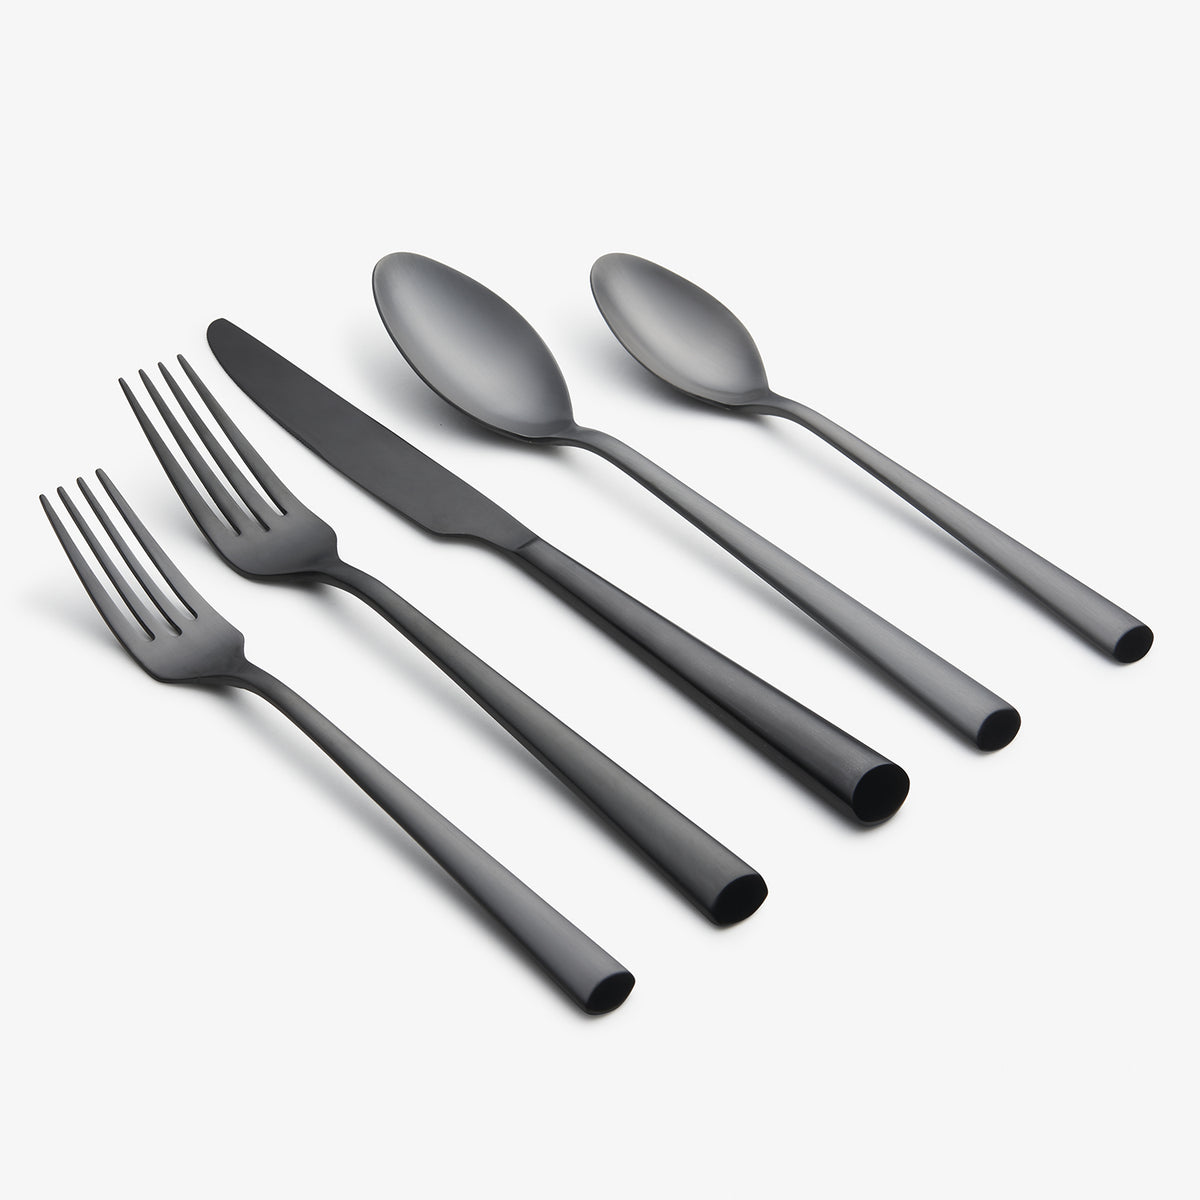 Plastic Cutlery Sets - Black Flatware Sets